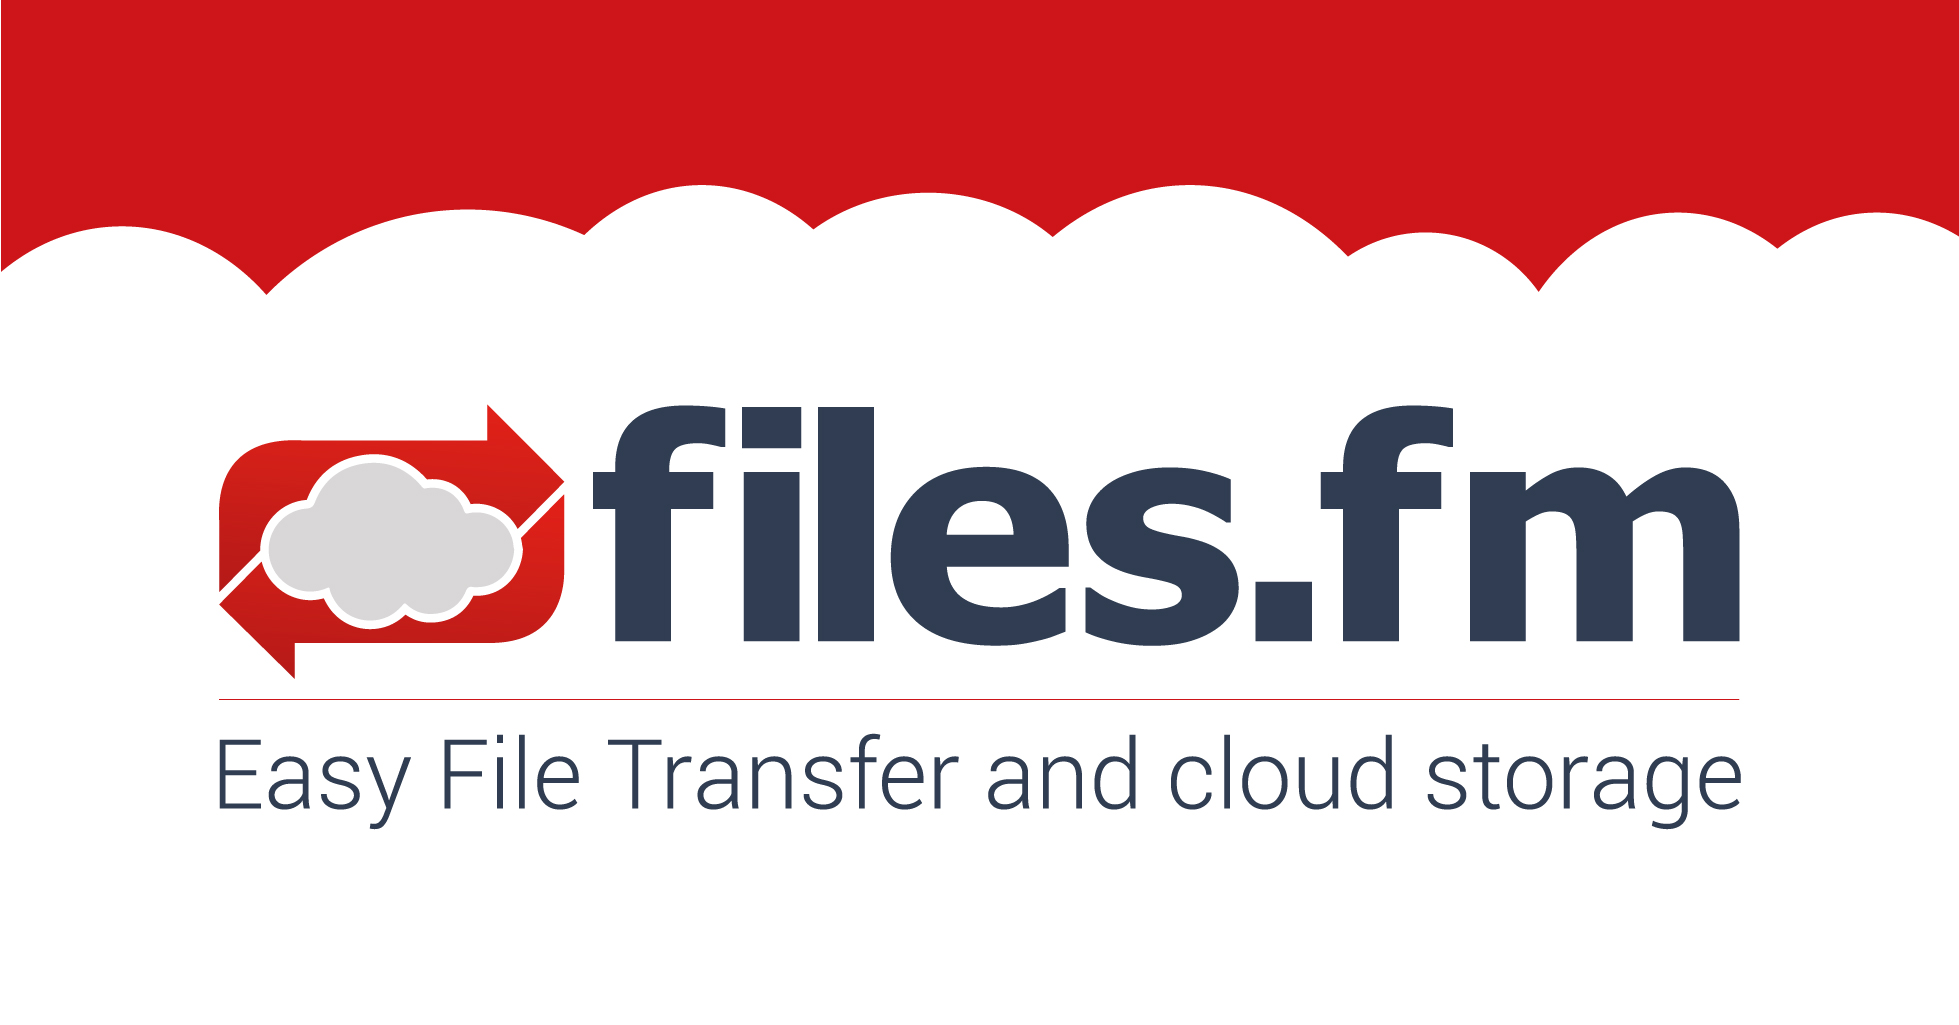 Files. File Exchanger. Https: // ru. Files. Fm/u/k8twvw6vt. Https nobr ru files